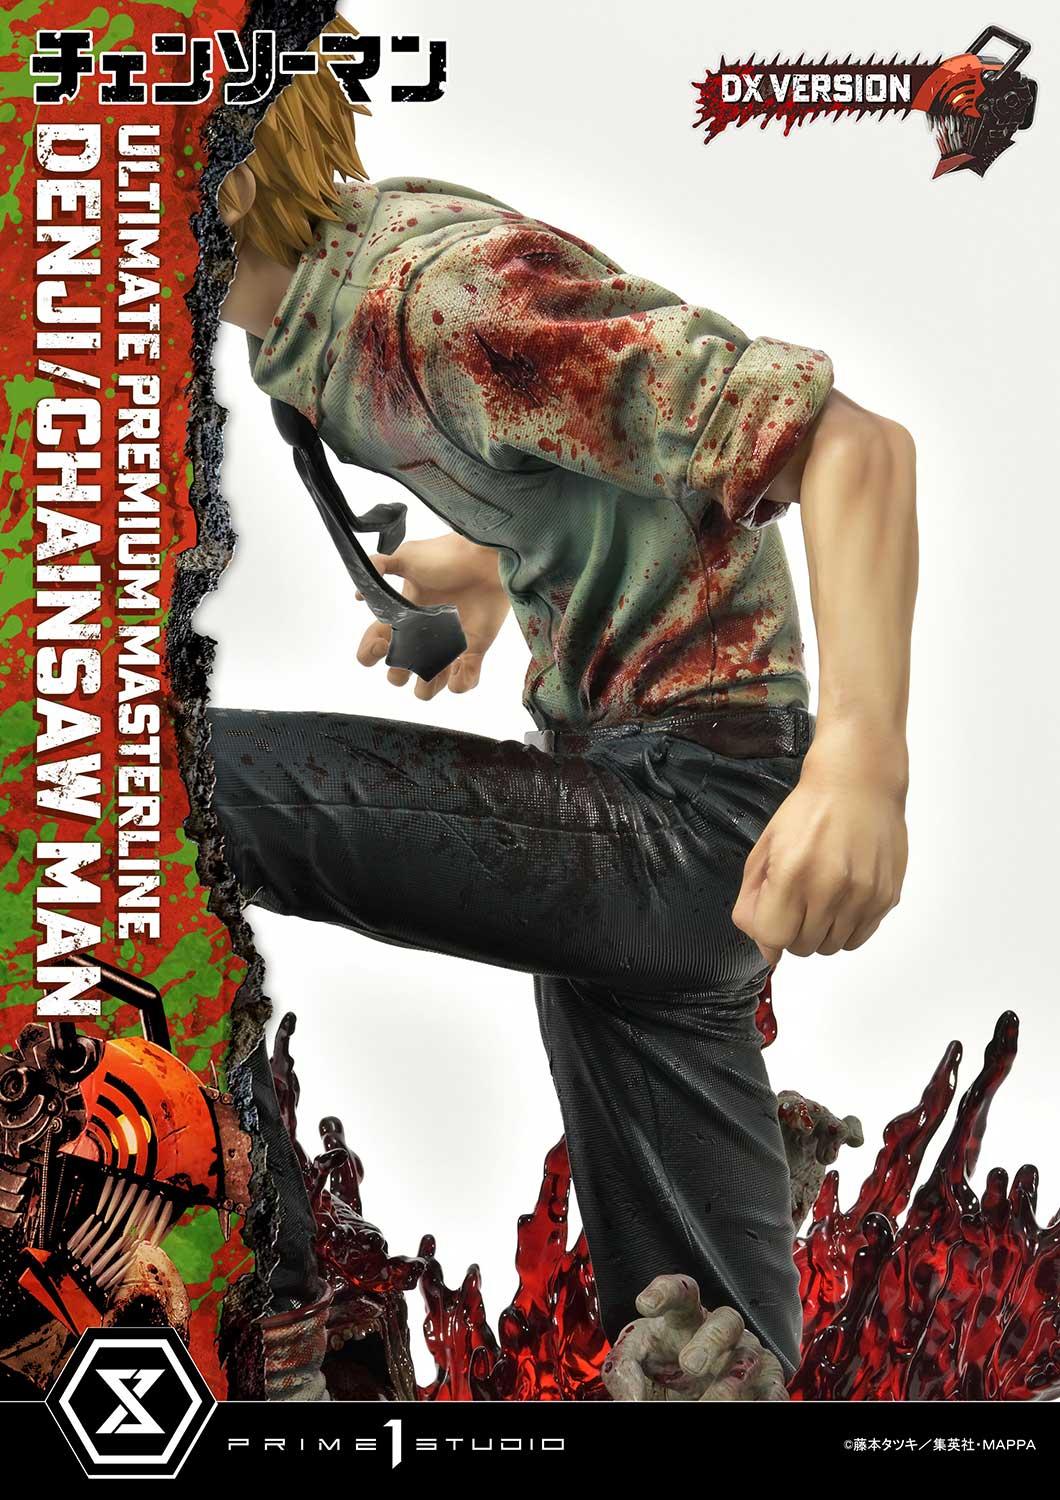 Chainsaw Man Animan Studio Version